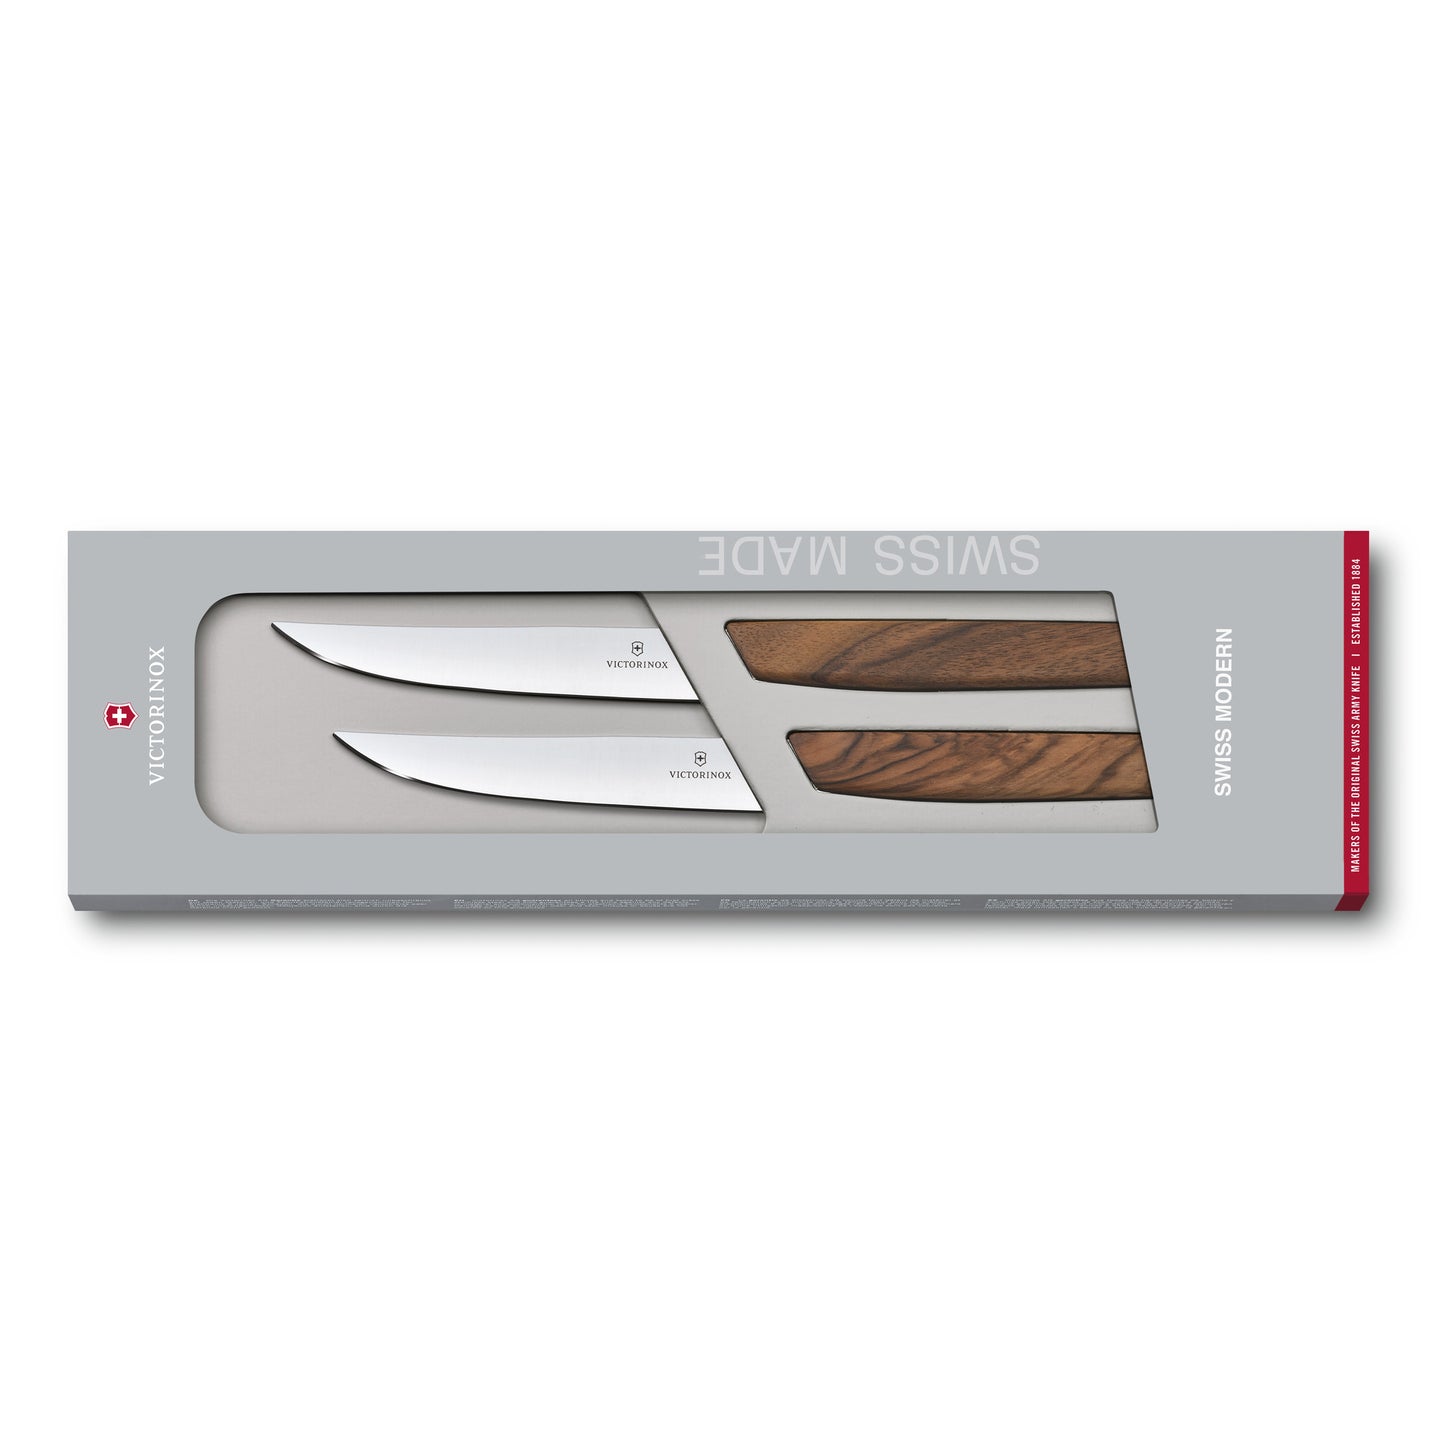 Swiss Modern Steak Knife Set, straight edge, set of two